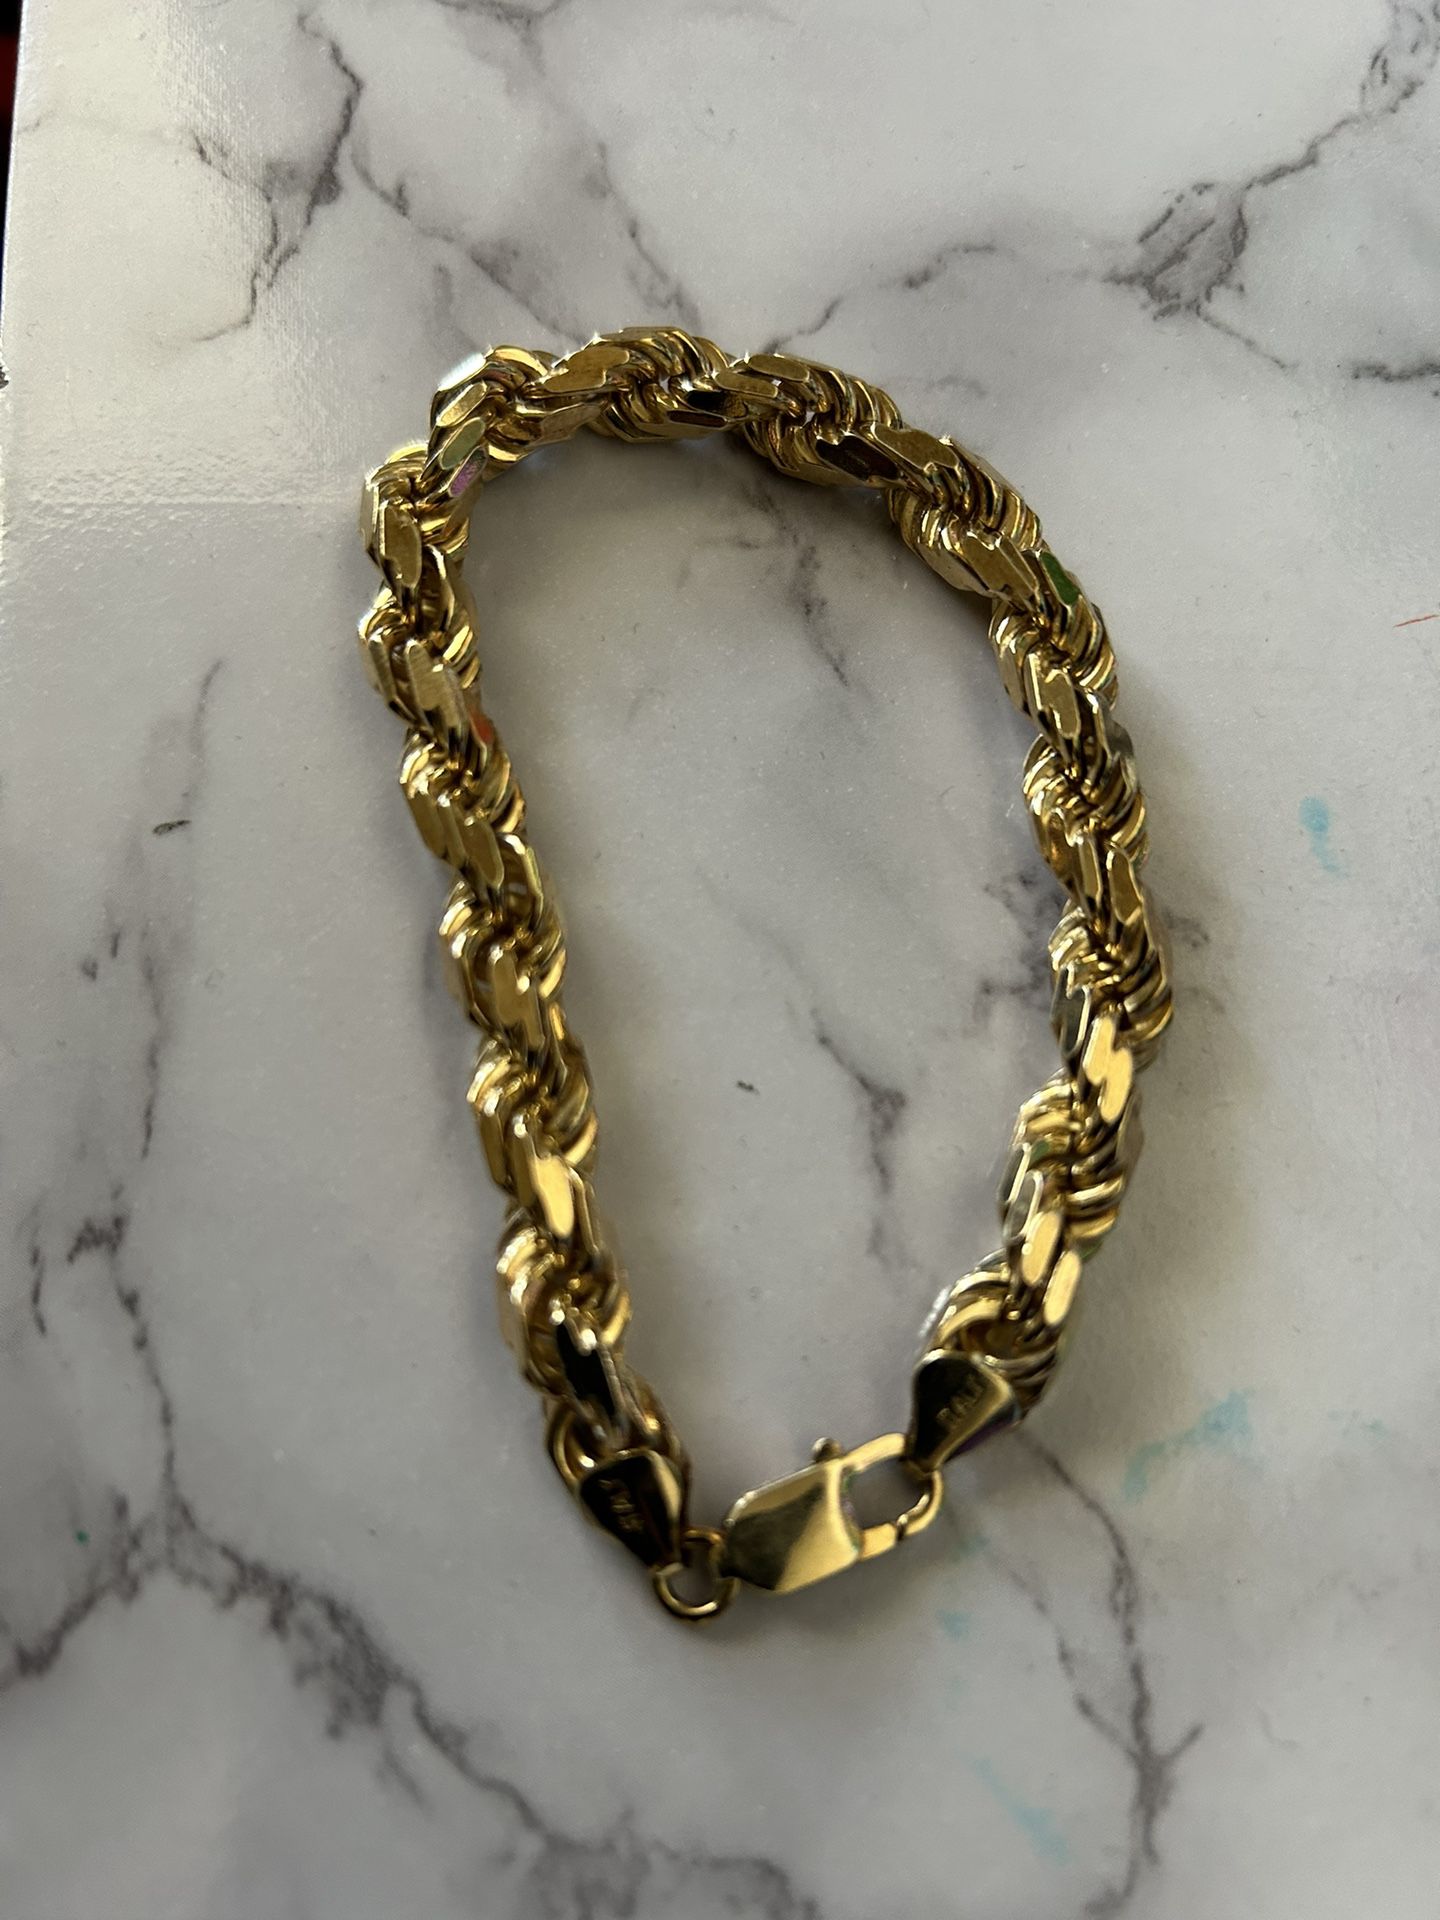 Diamond Cut Gold Bracelet 